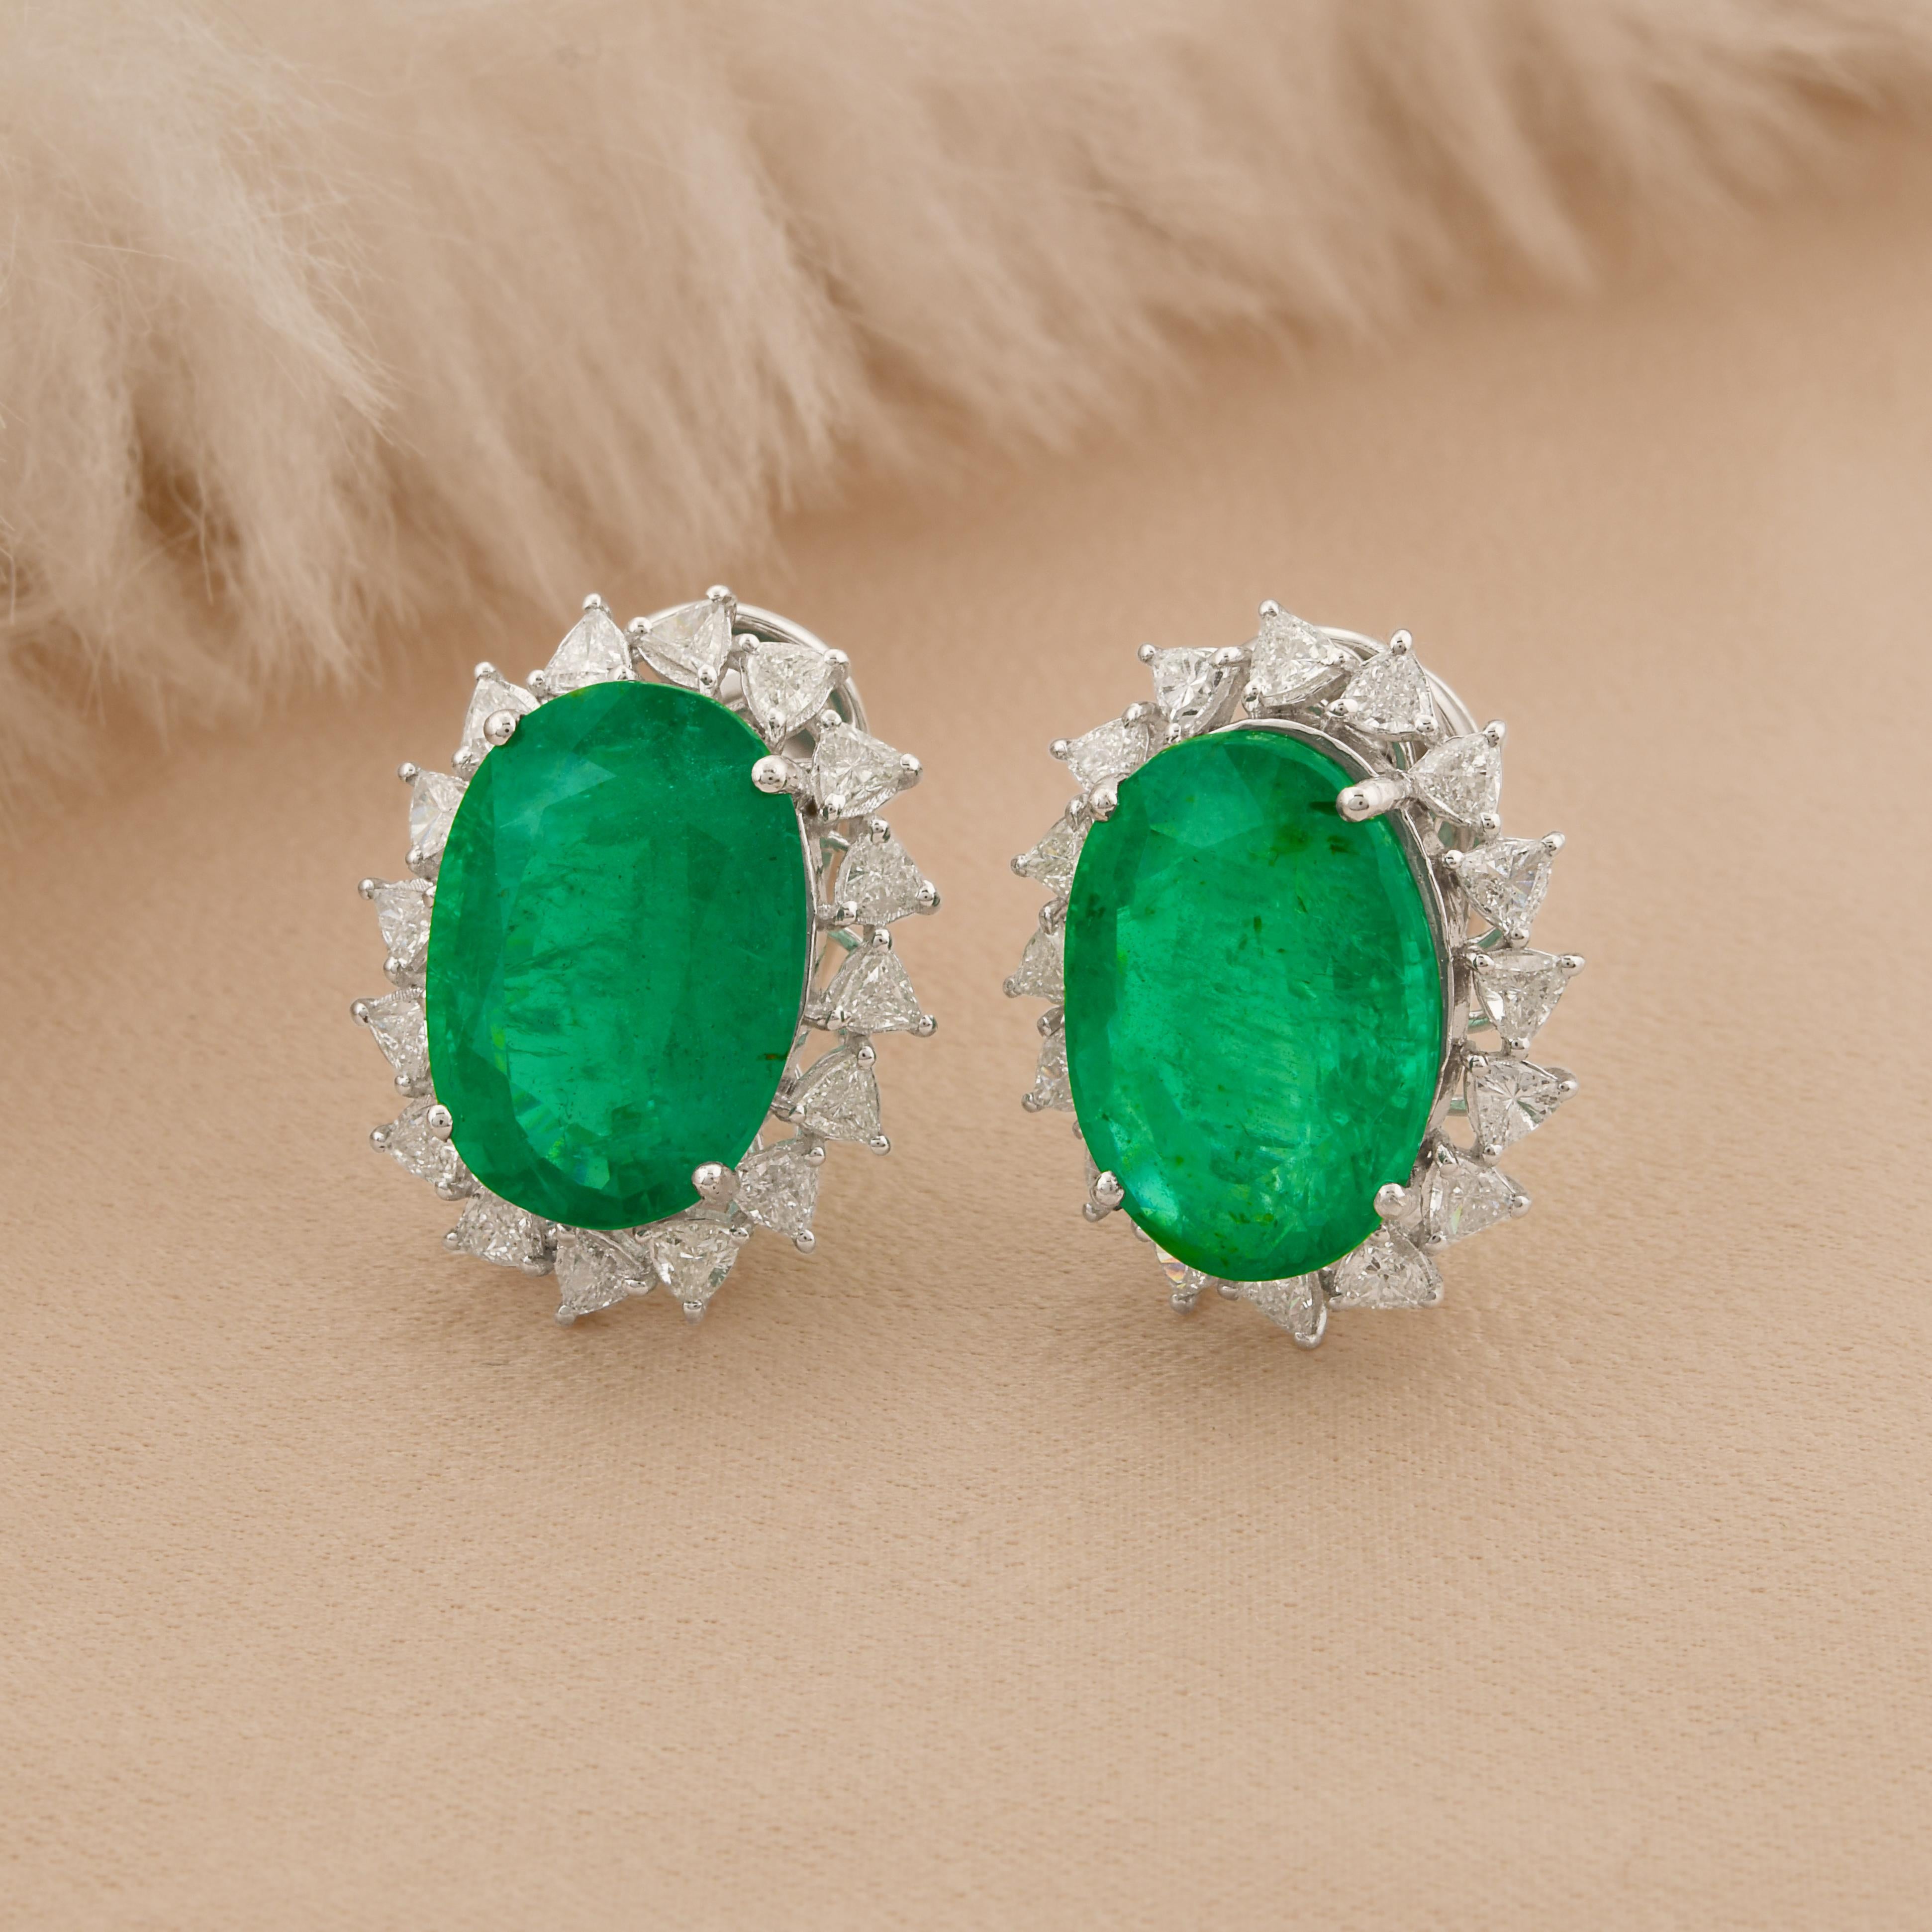 Modern Real Zambian Emerald Gemstone Trillion Diamond Earrings 14k White Gold Jewelry For Sale